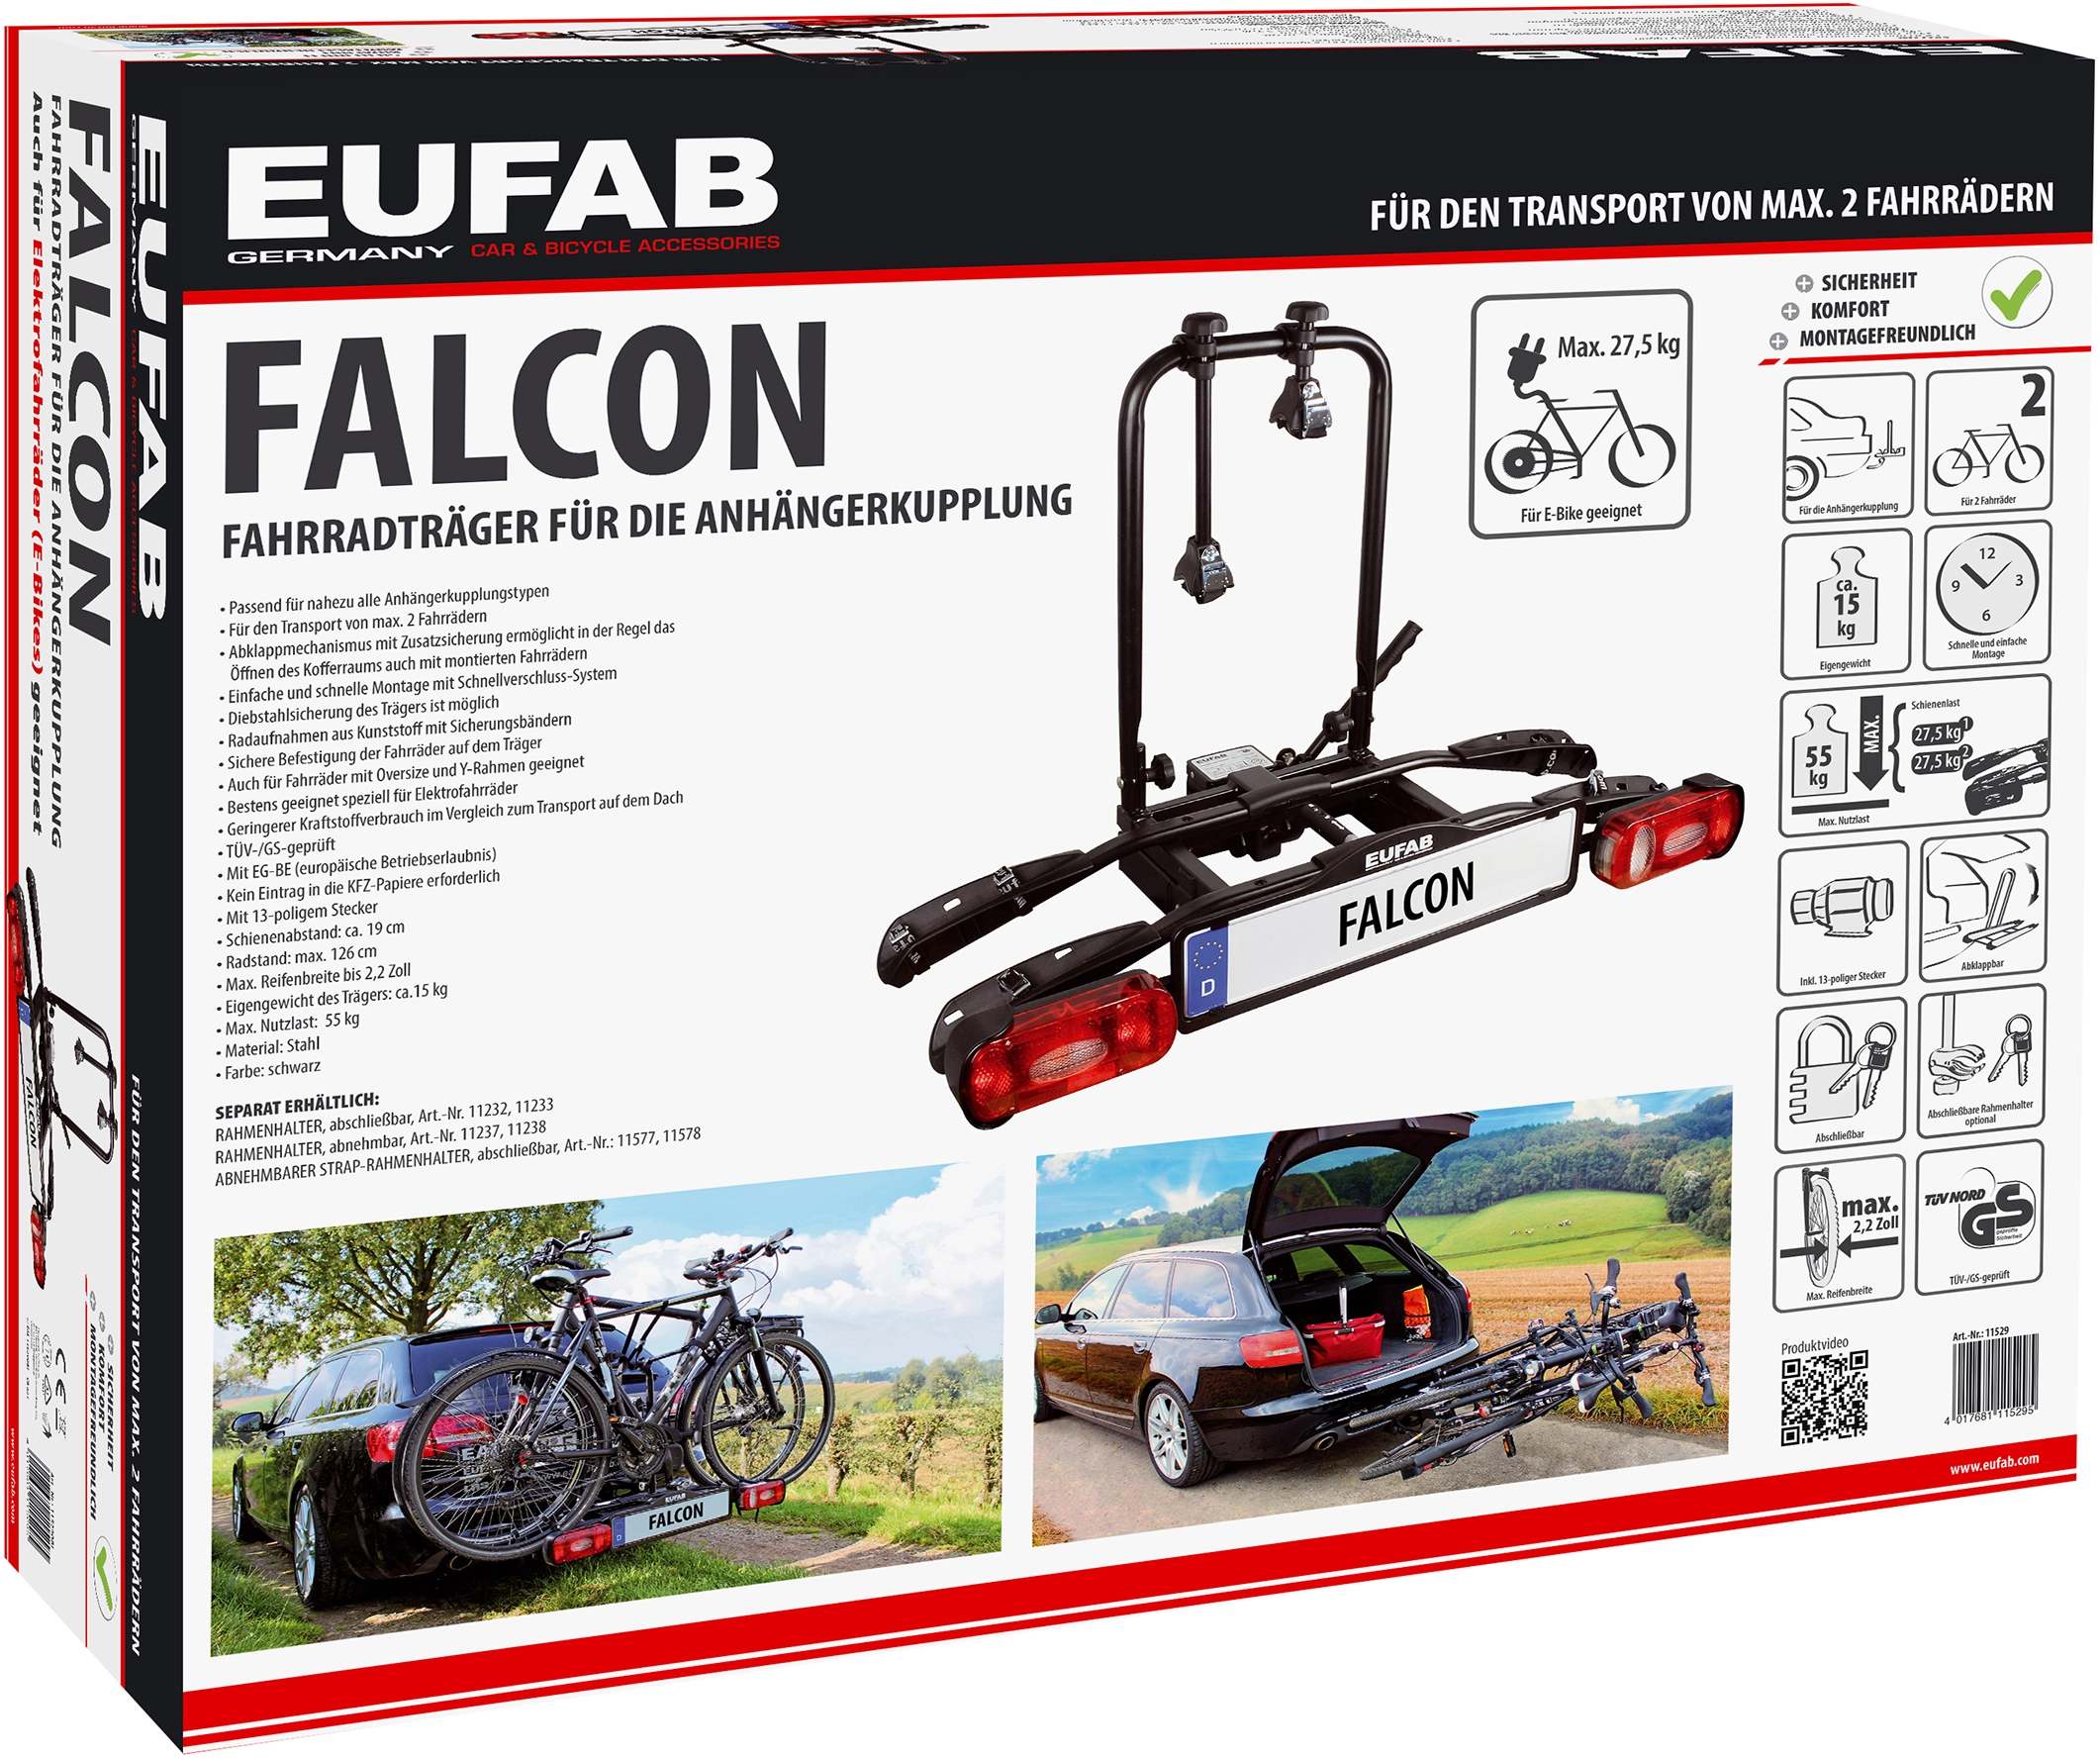 Fahrrad-Kupplungsträger Falcon kaufen OBI bei Eufab